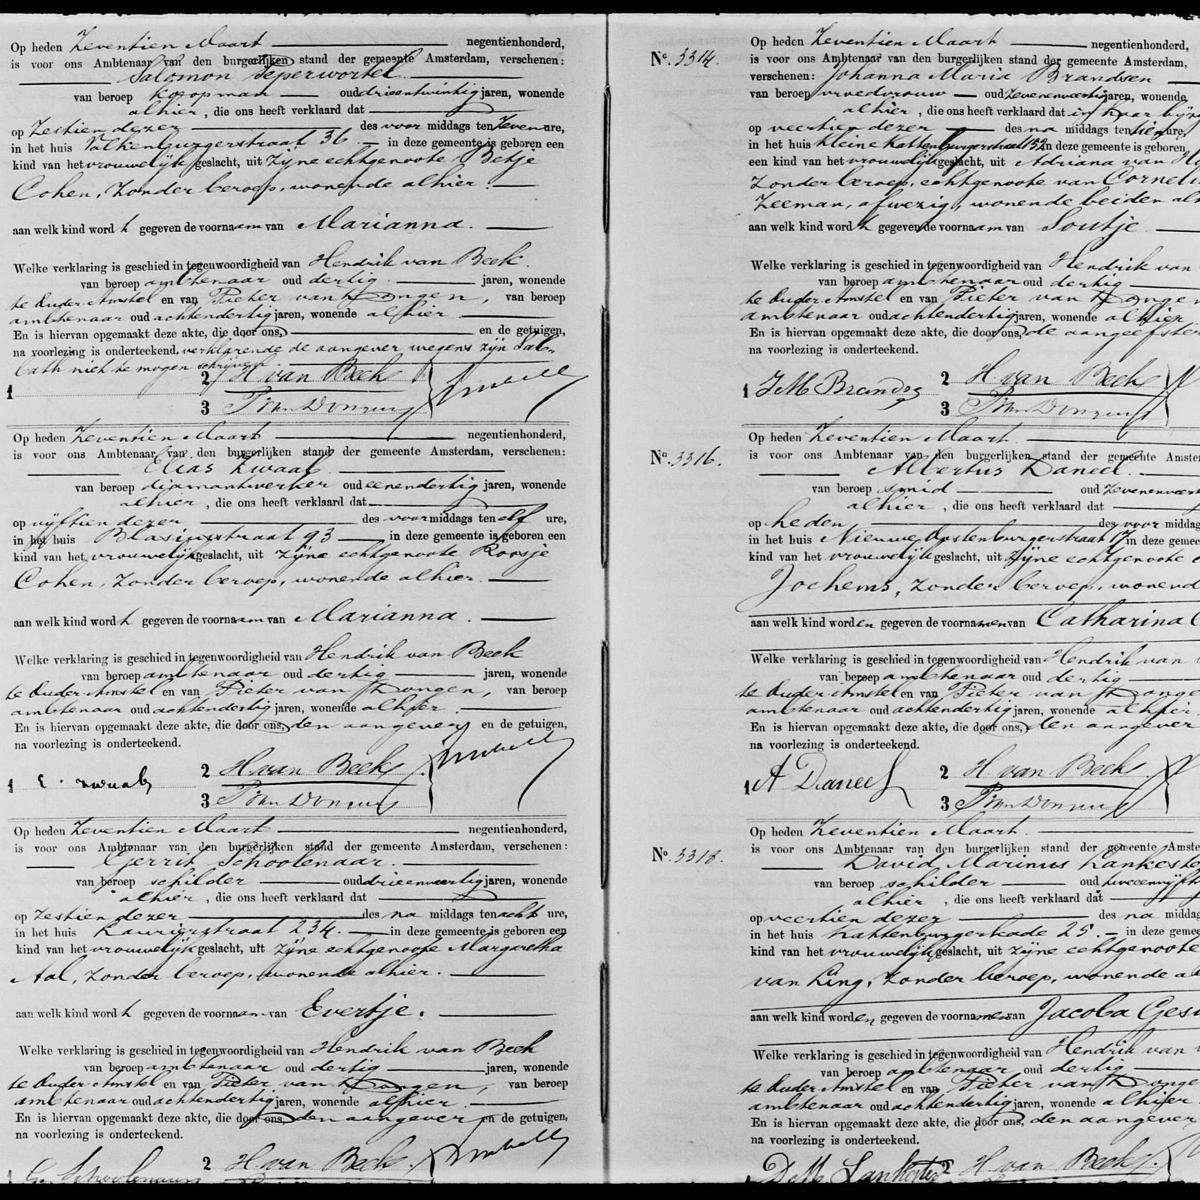 Civil registry of births, Amsterdam, 1900, records 3308-3318